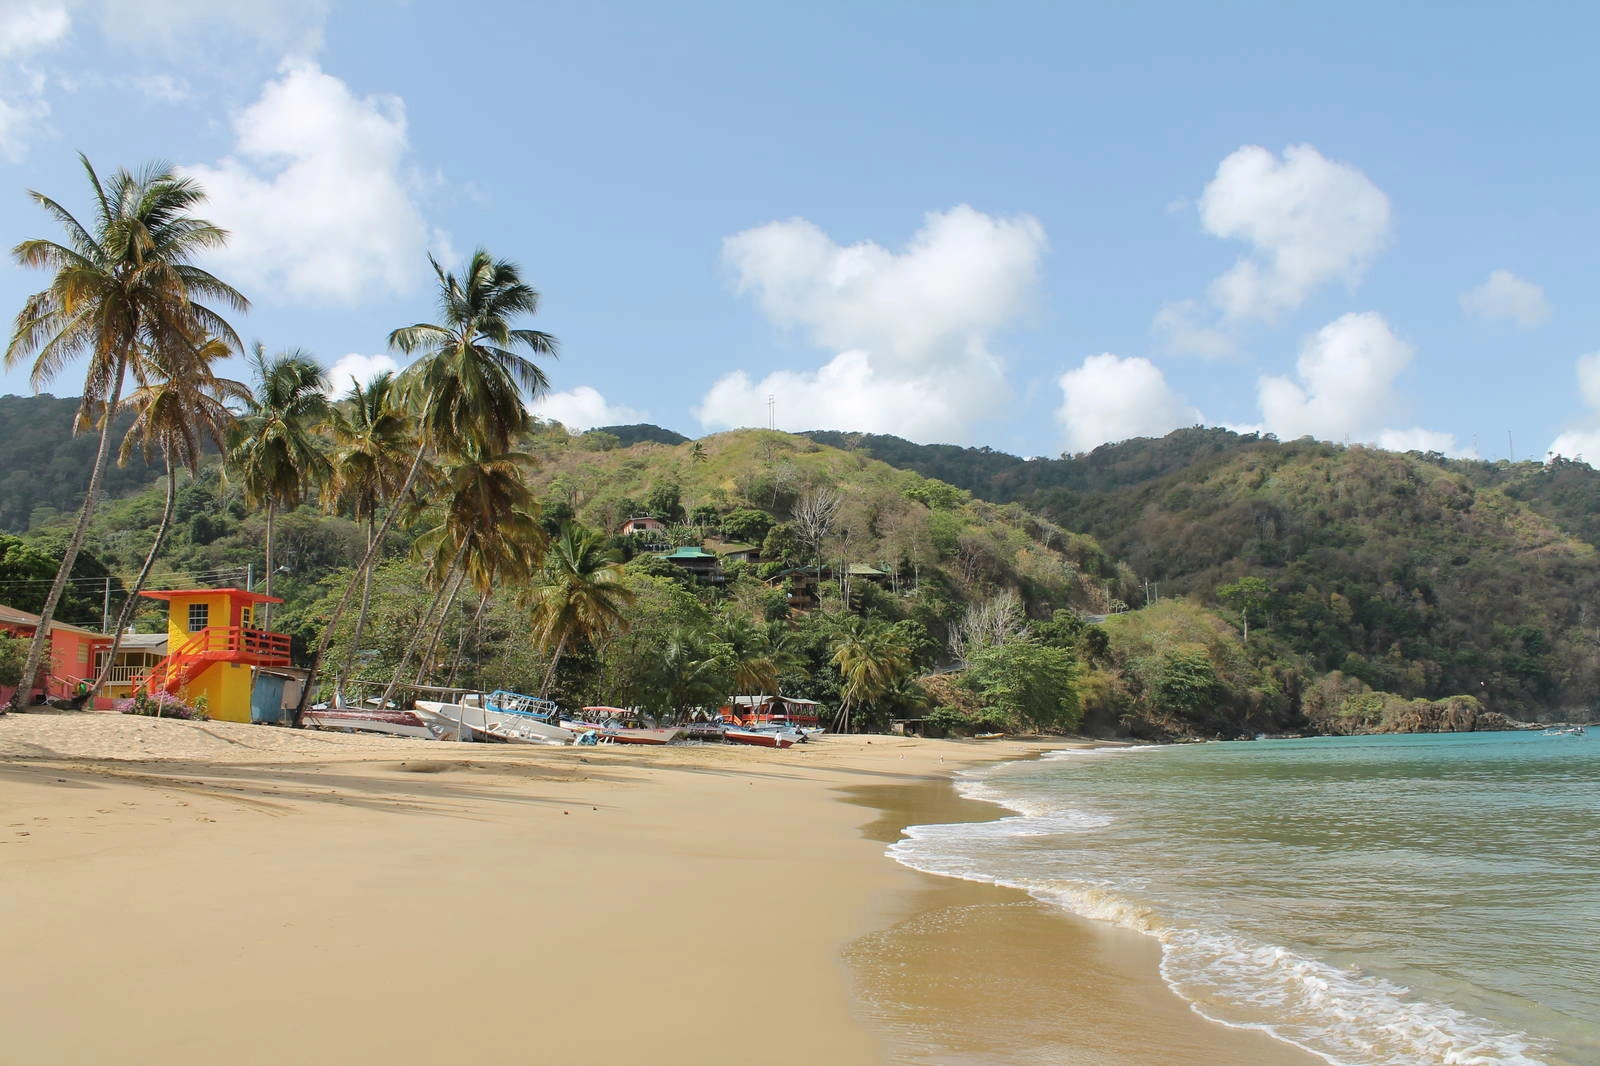  Castara  strand - Trinidad and Tobago